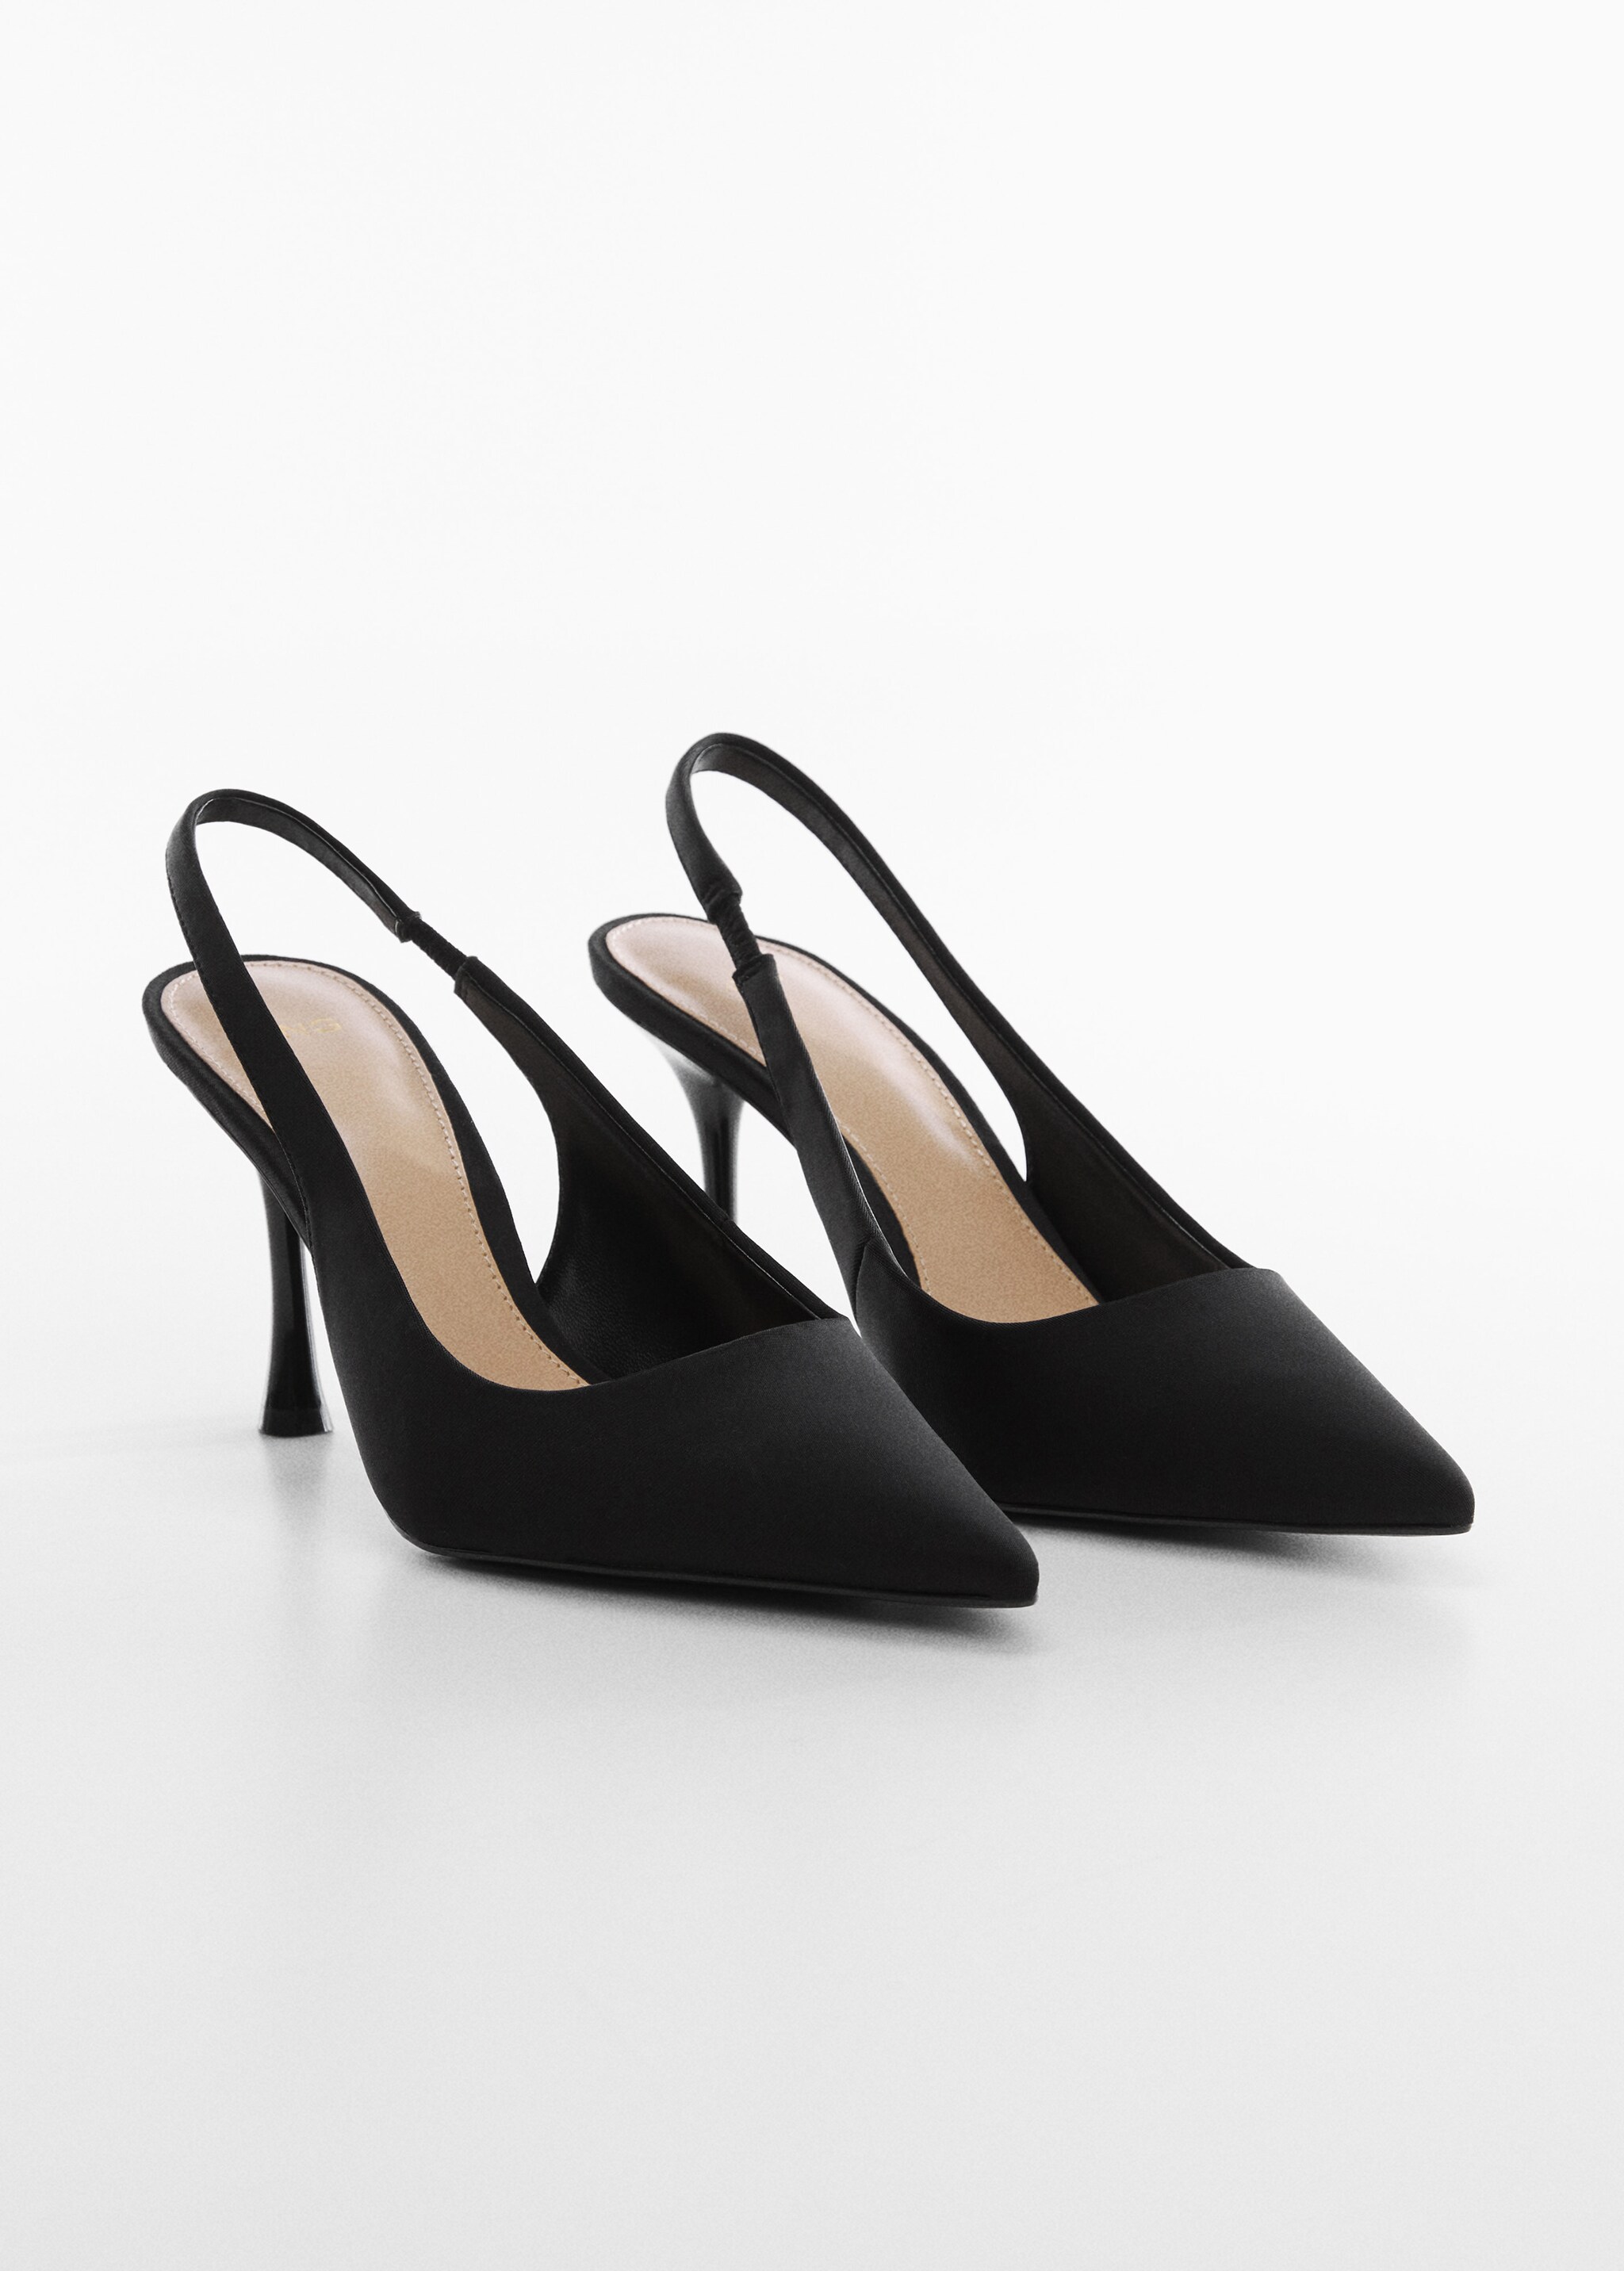 Pointed-toe heeled shoes  - Plan mediu